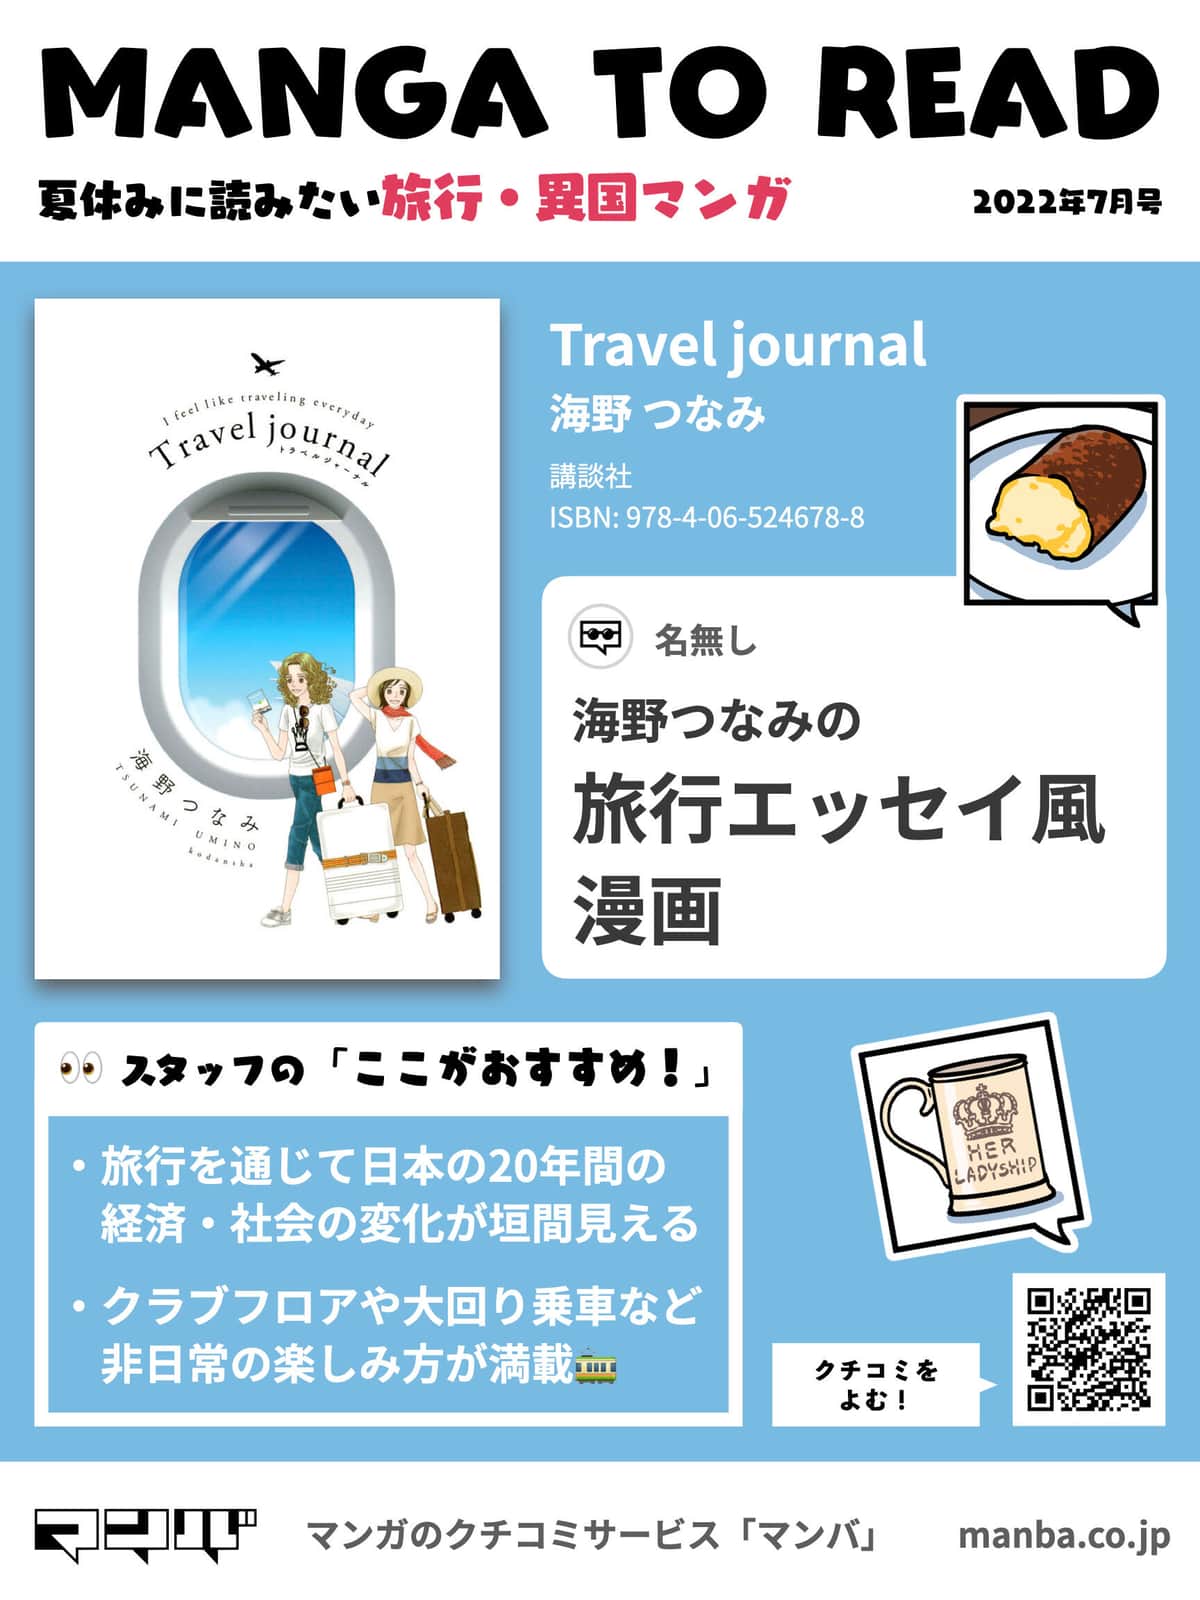 「Travel journal」